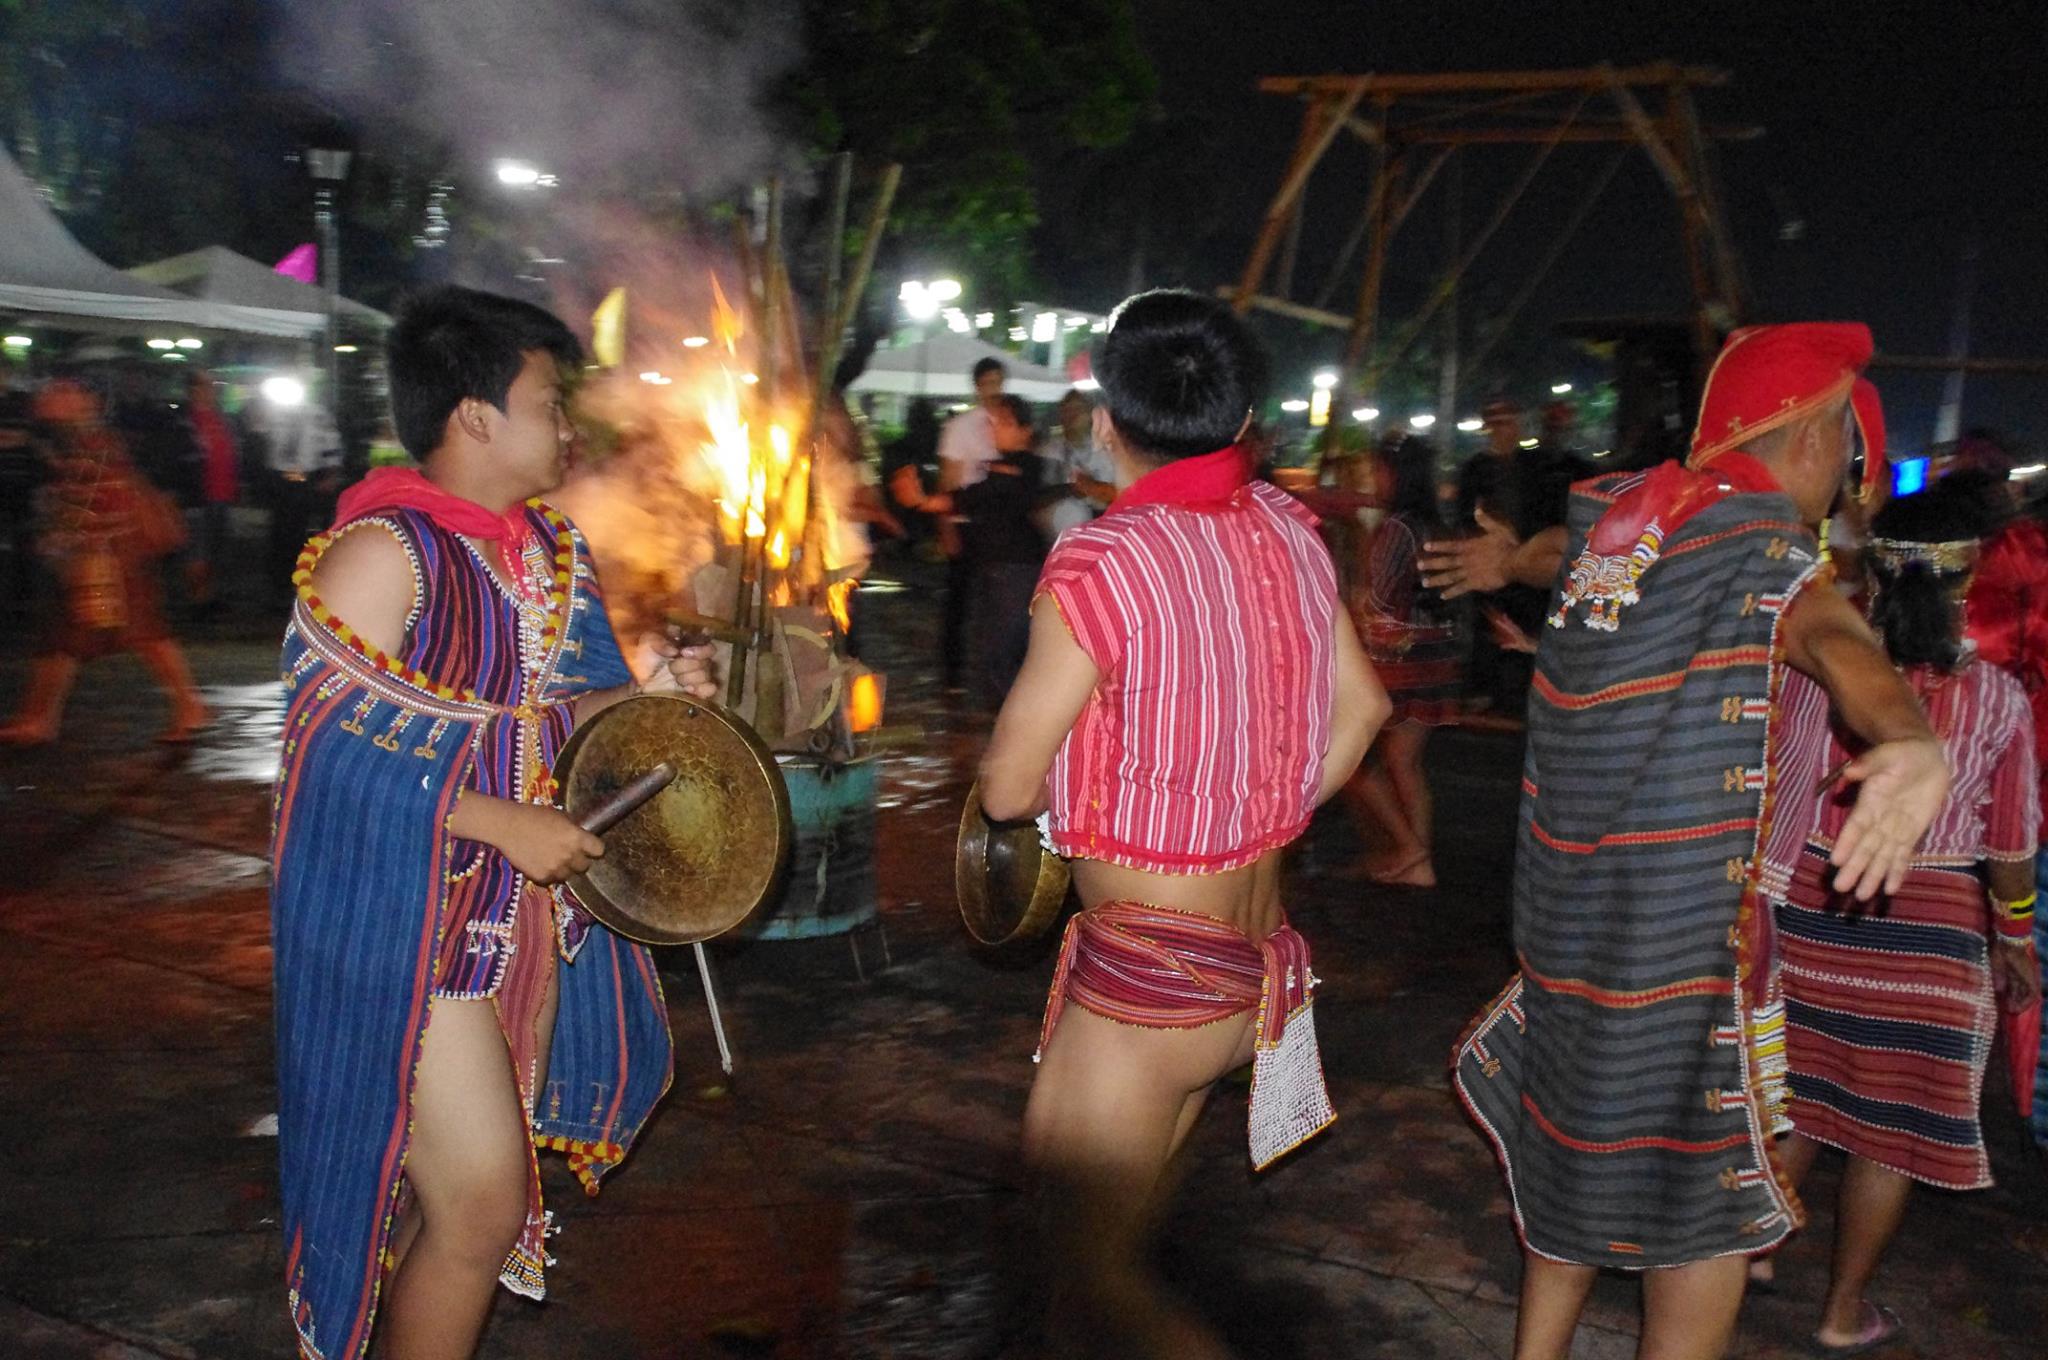 COMMUNITY DANCE. Dayaw Festival culminated with a spirited community dance around a bonfire. Photo by Leon Pangilinan, Jr./NCCA 